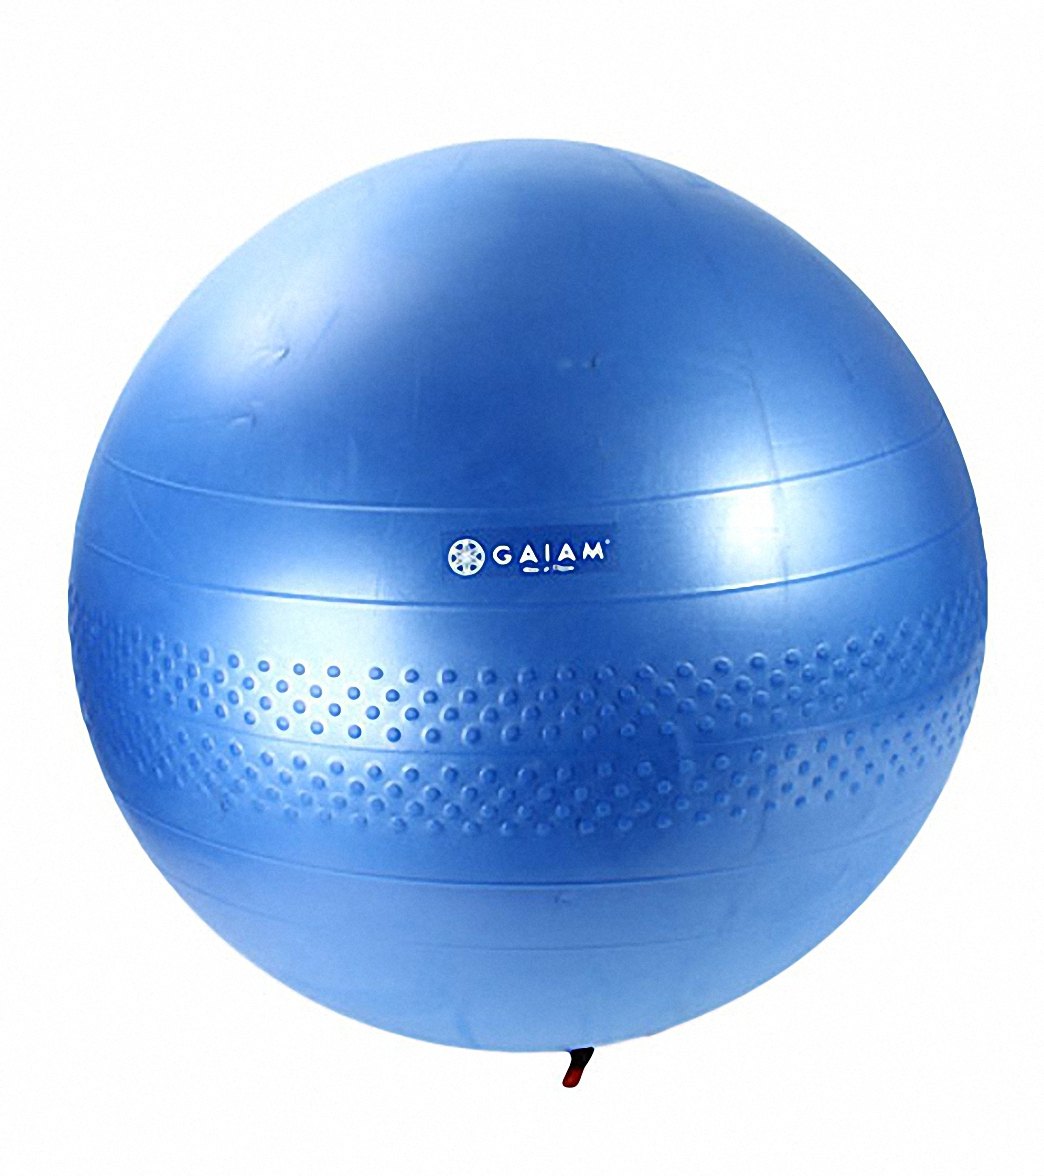 Gaiam Eco Total Body Balance Ball Kit at